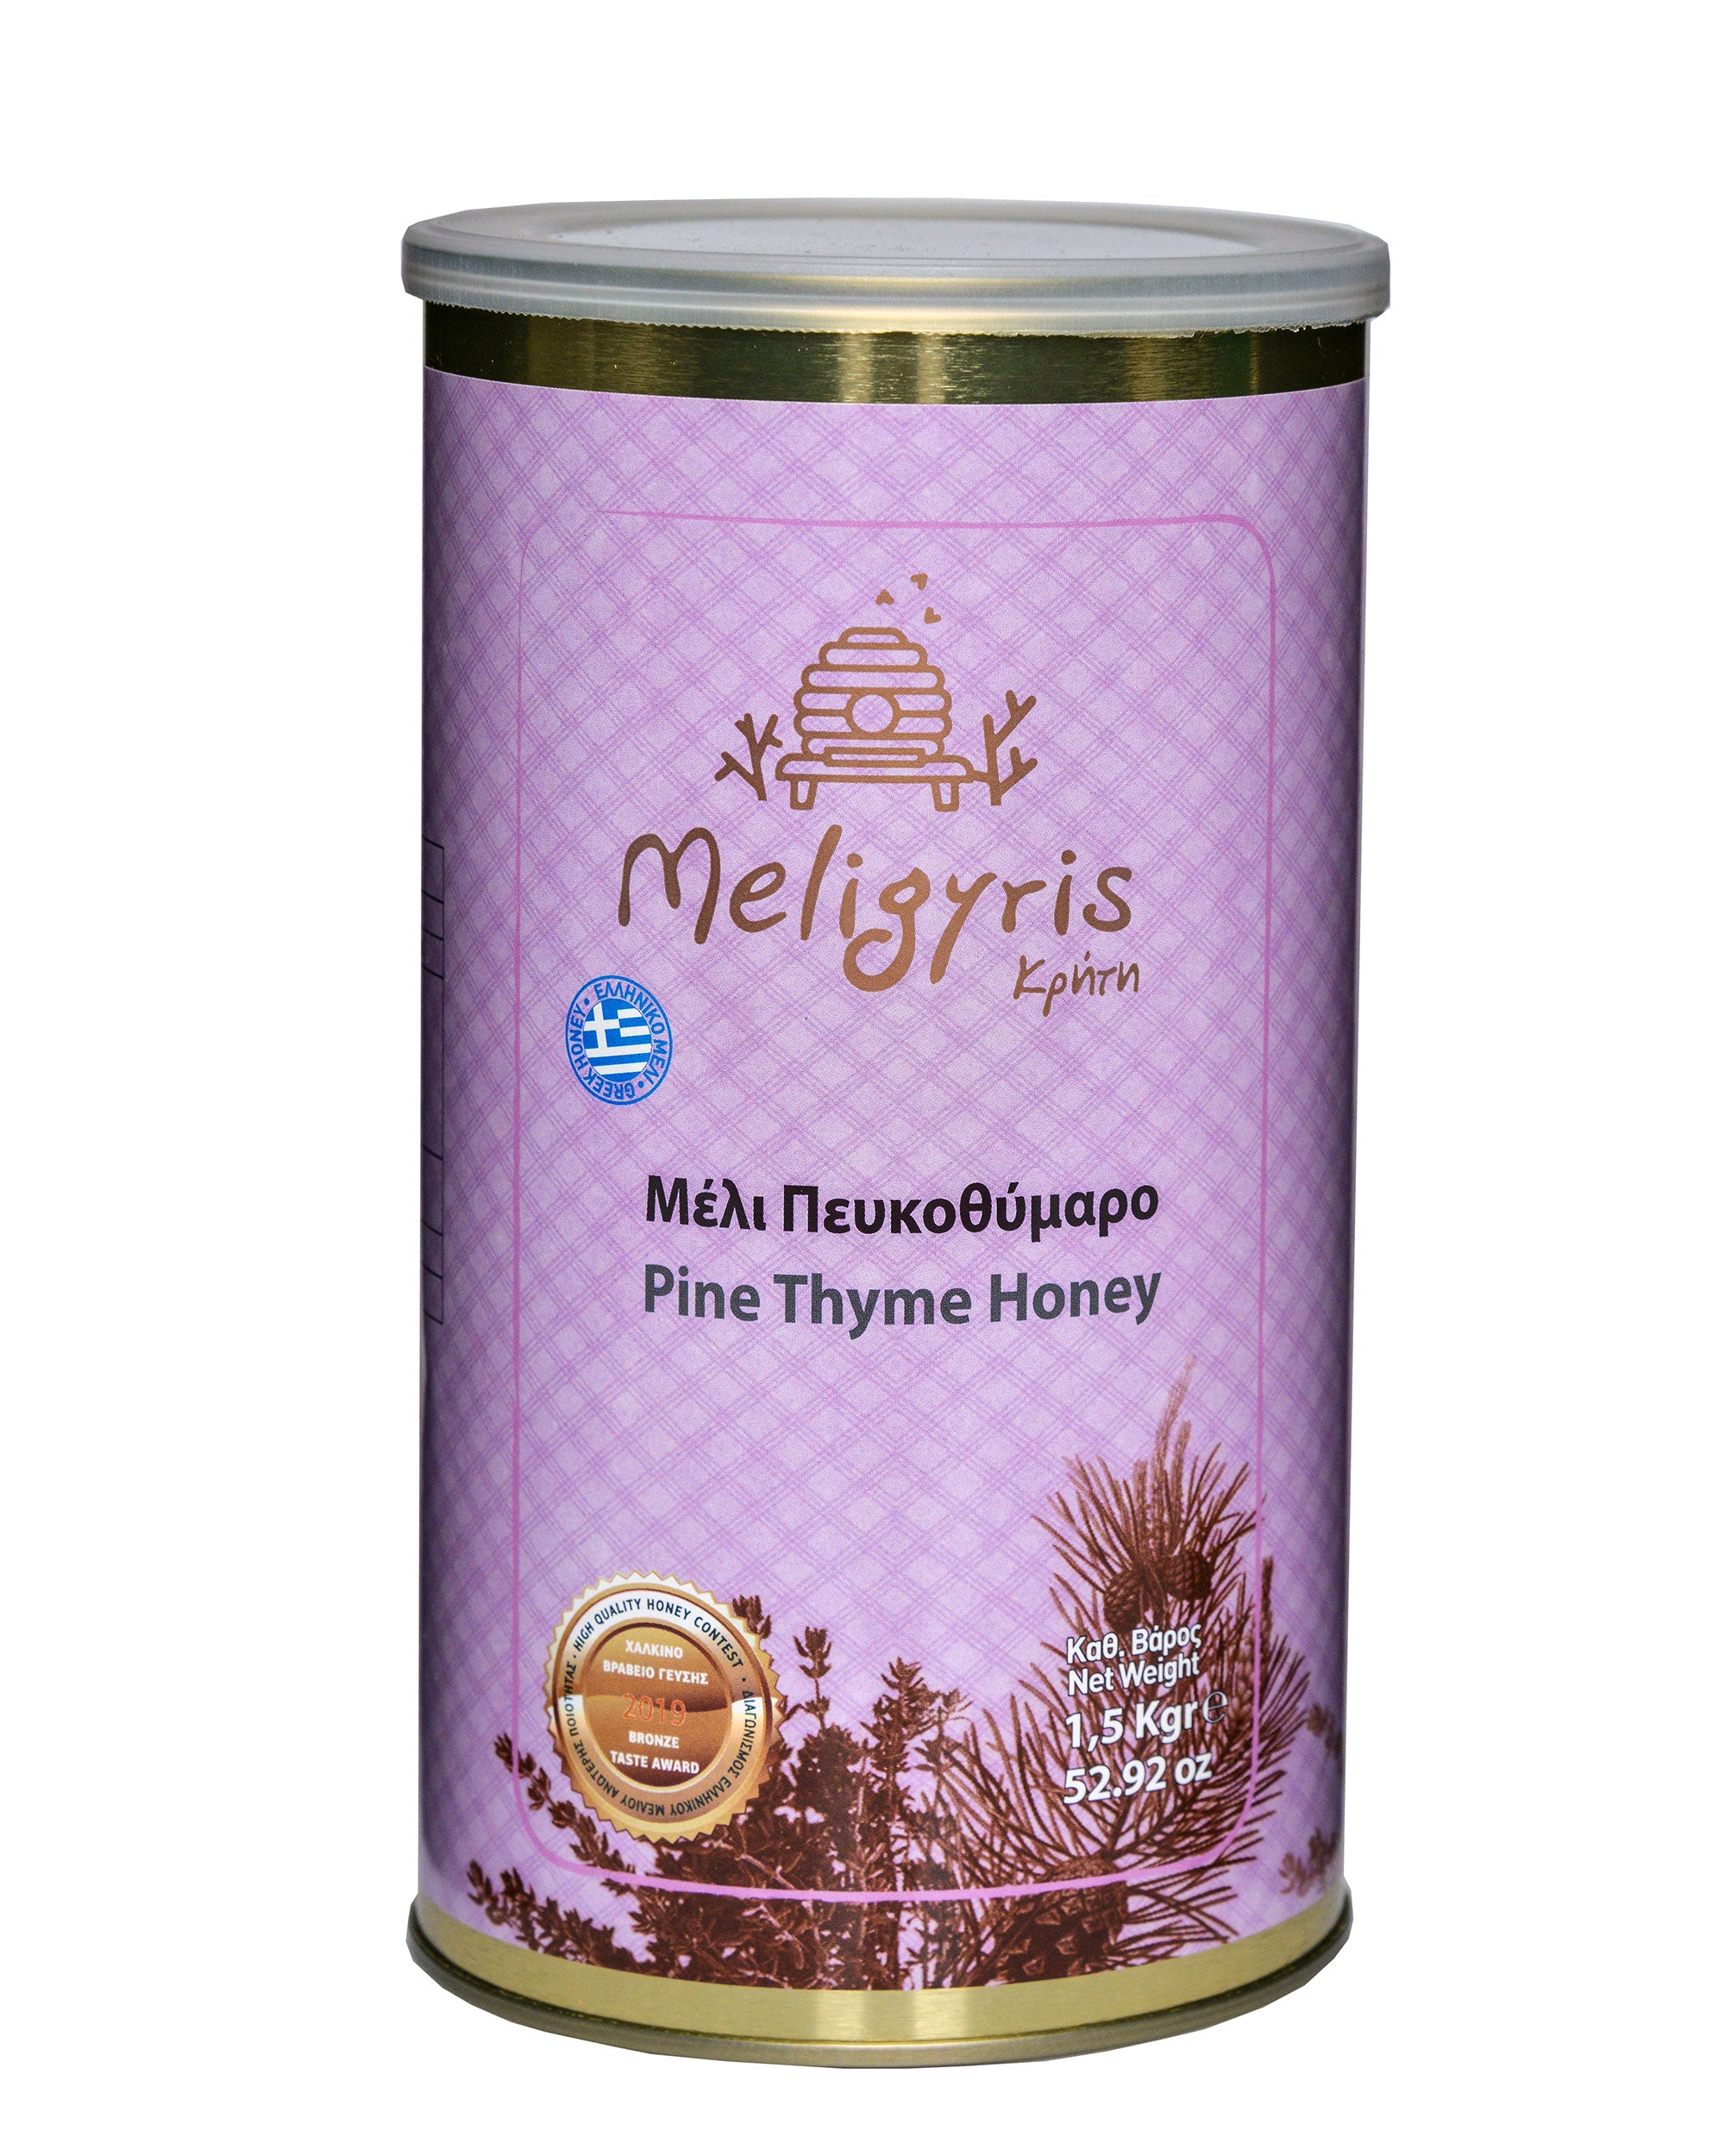 Greek Forest Honey, Pine Thyme